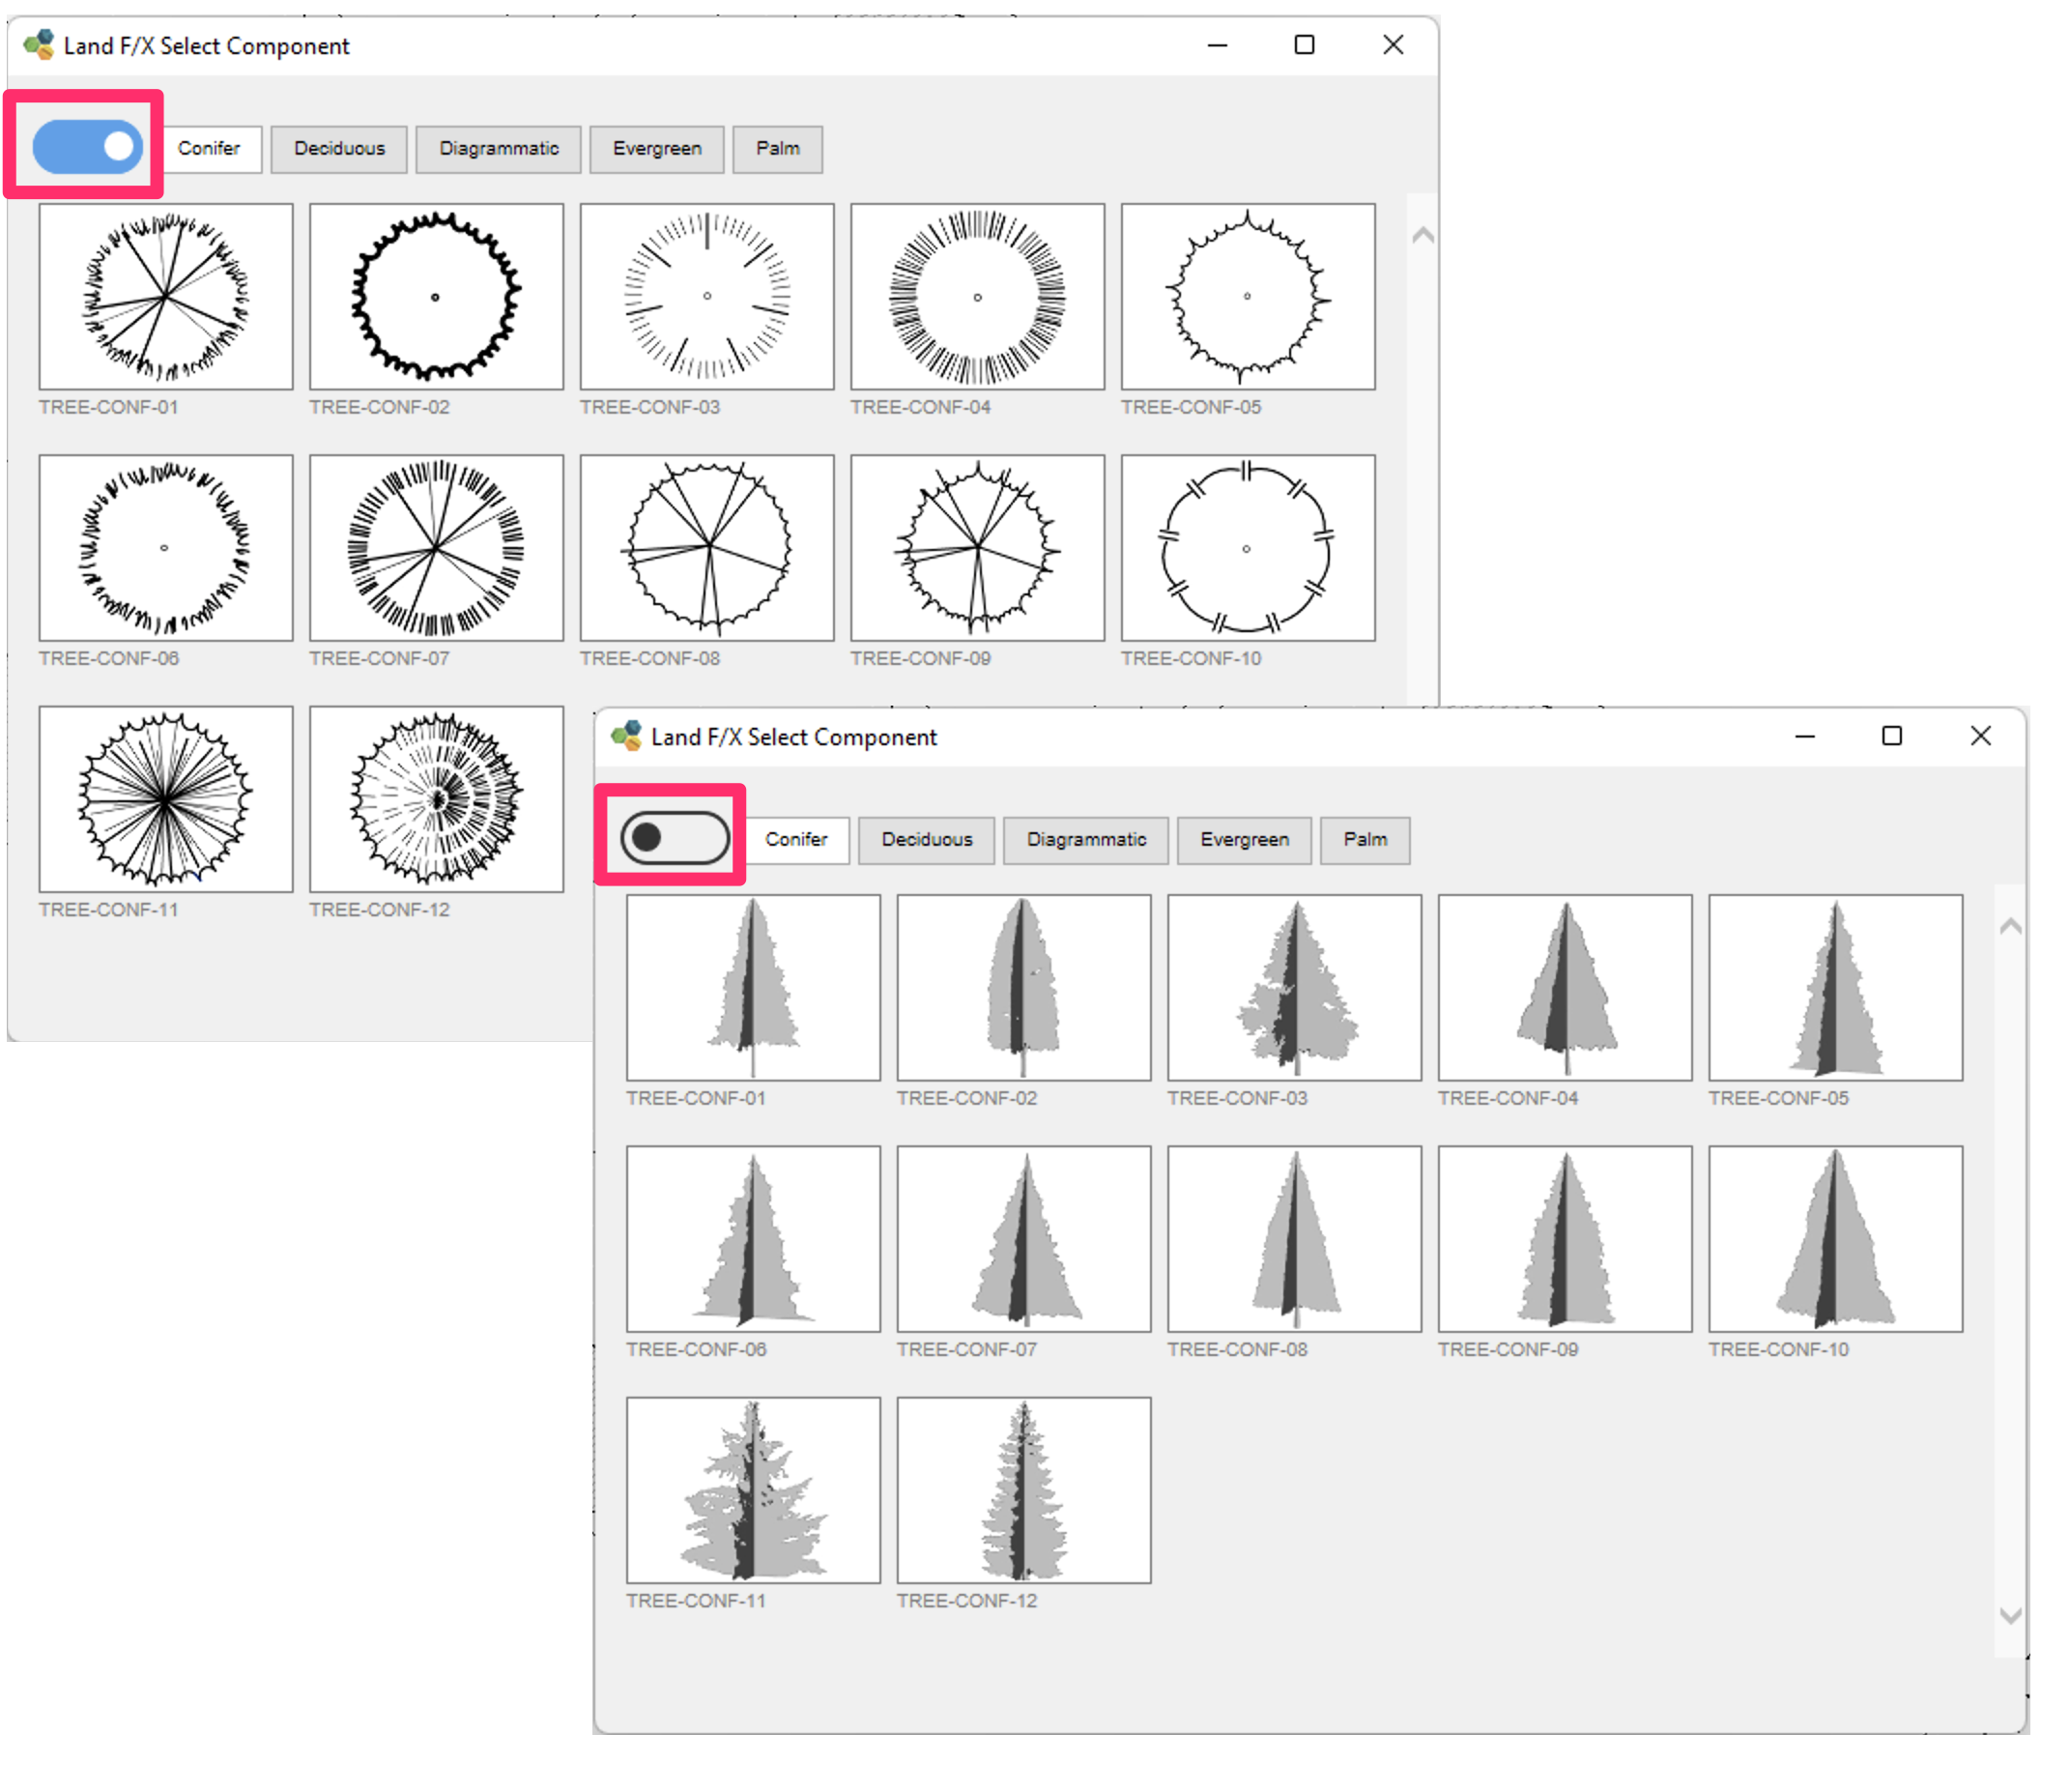 Land F/X Select Component dialog box, tree and shrub symbol family options